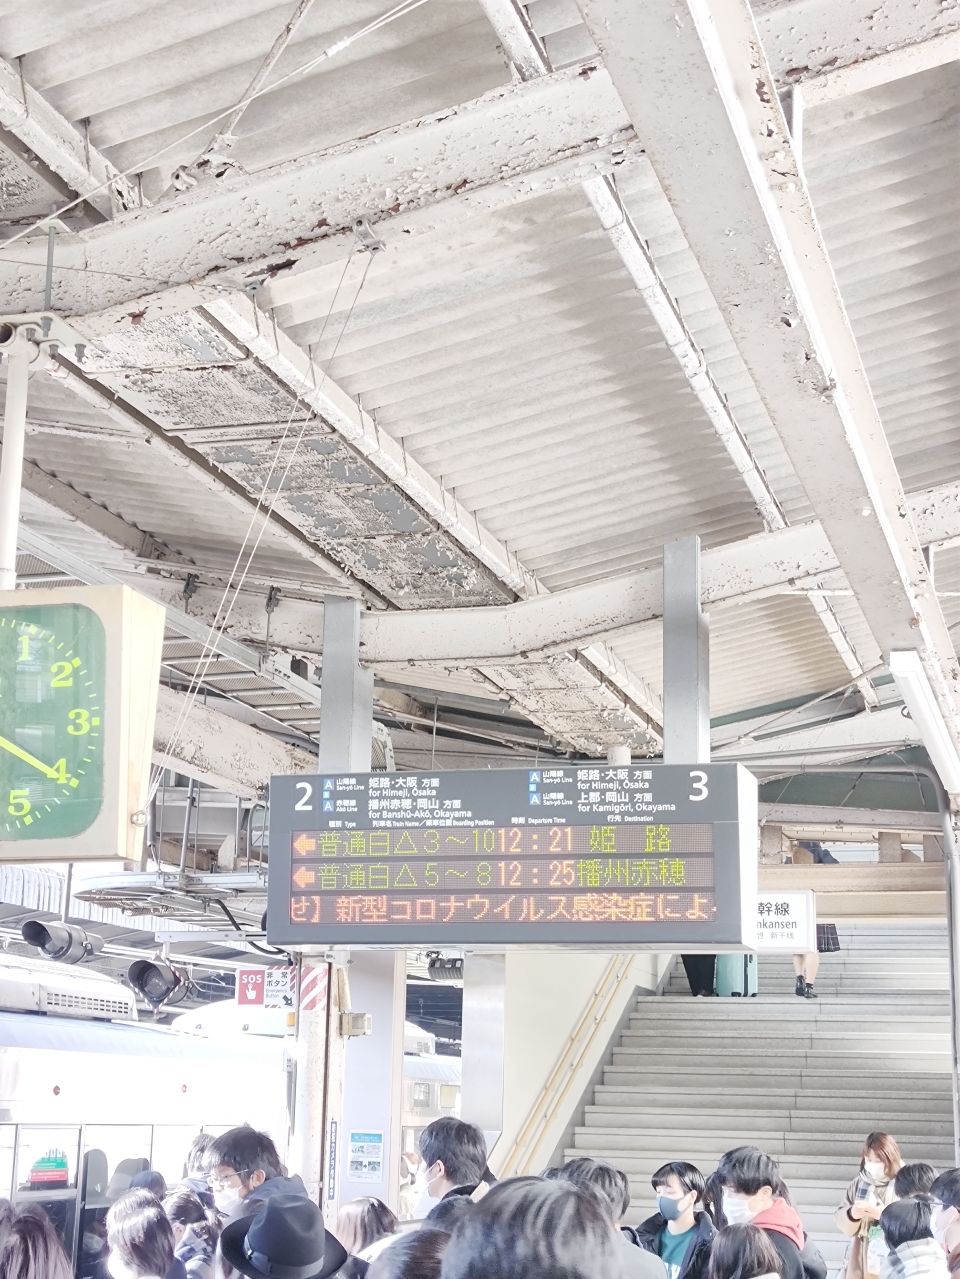 鉄道乗車記録「相生駅から姫路駅」駅舎・駅施設、様子の写真(1) by tmizuno99 撮影日時:2021年12月24日